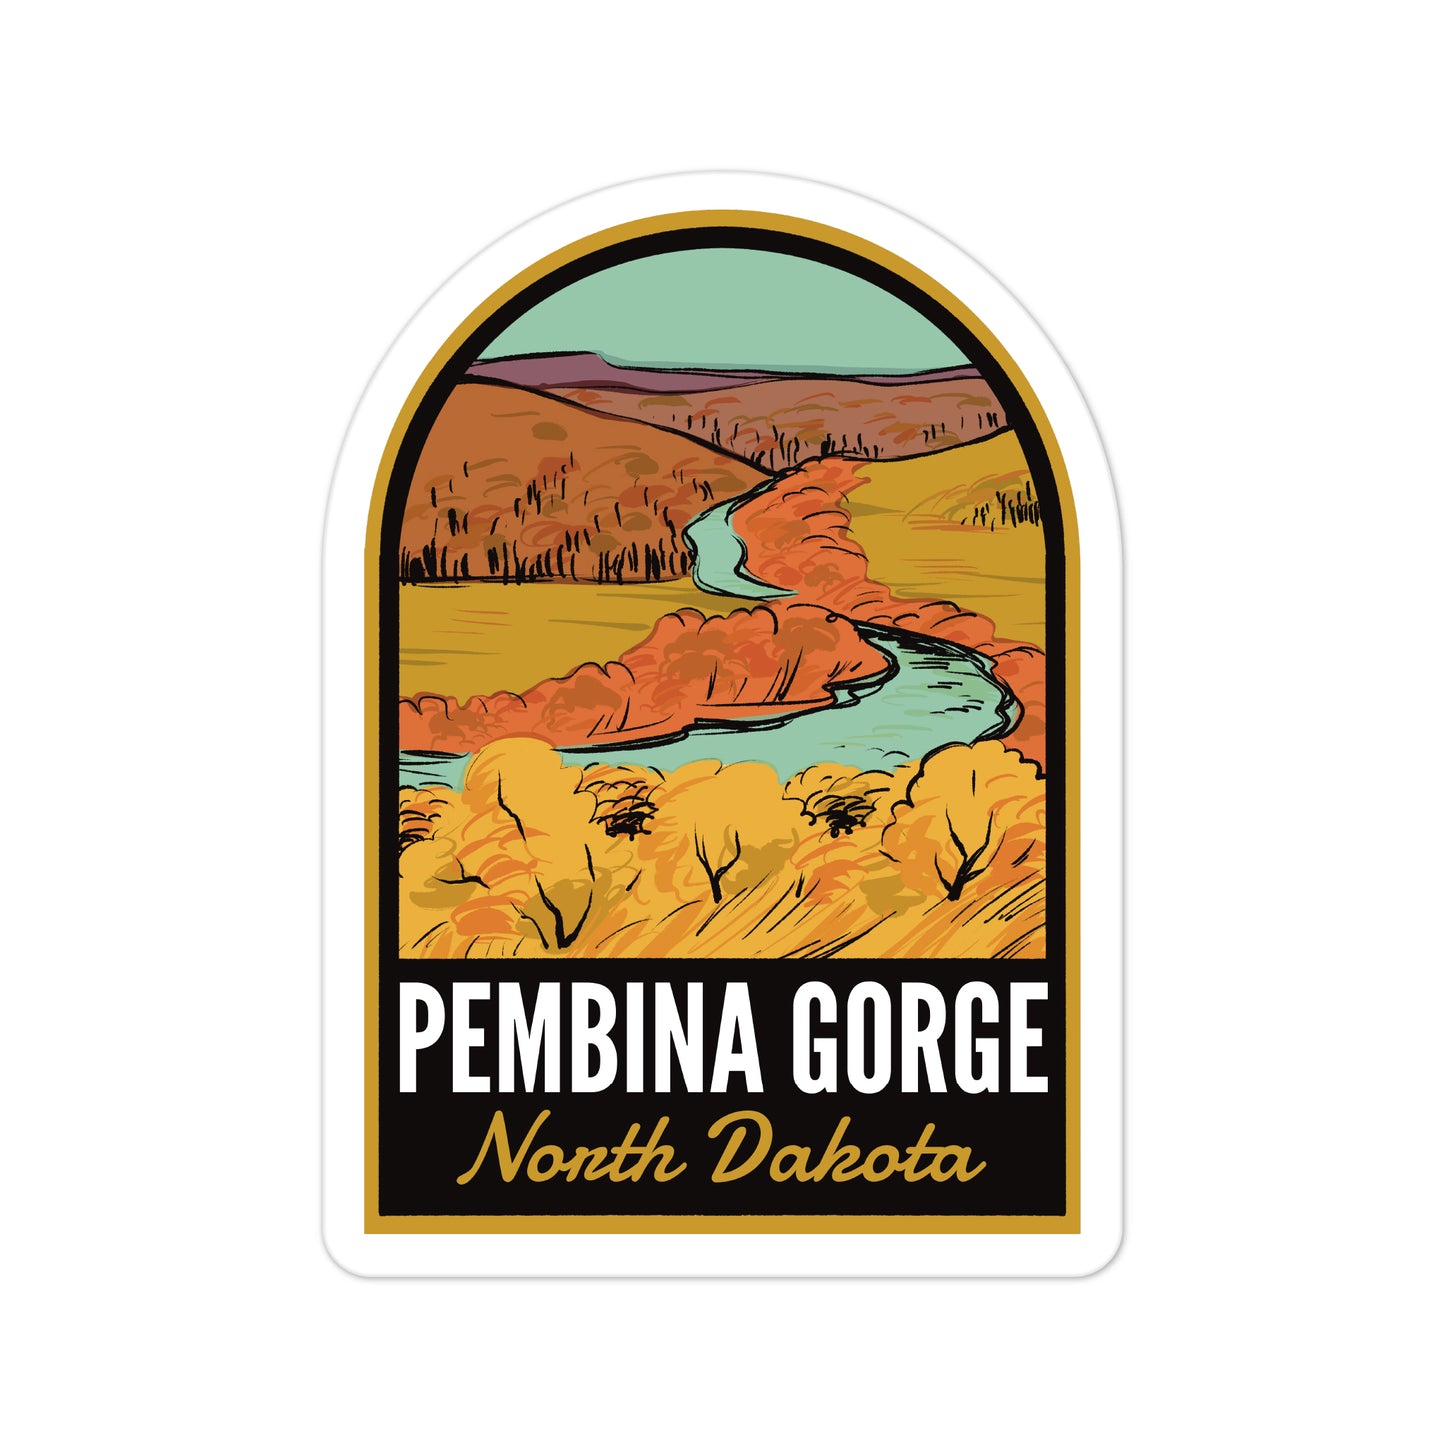 A sticker of Pembina Gorge North Dakota